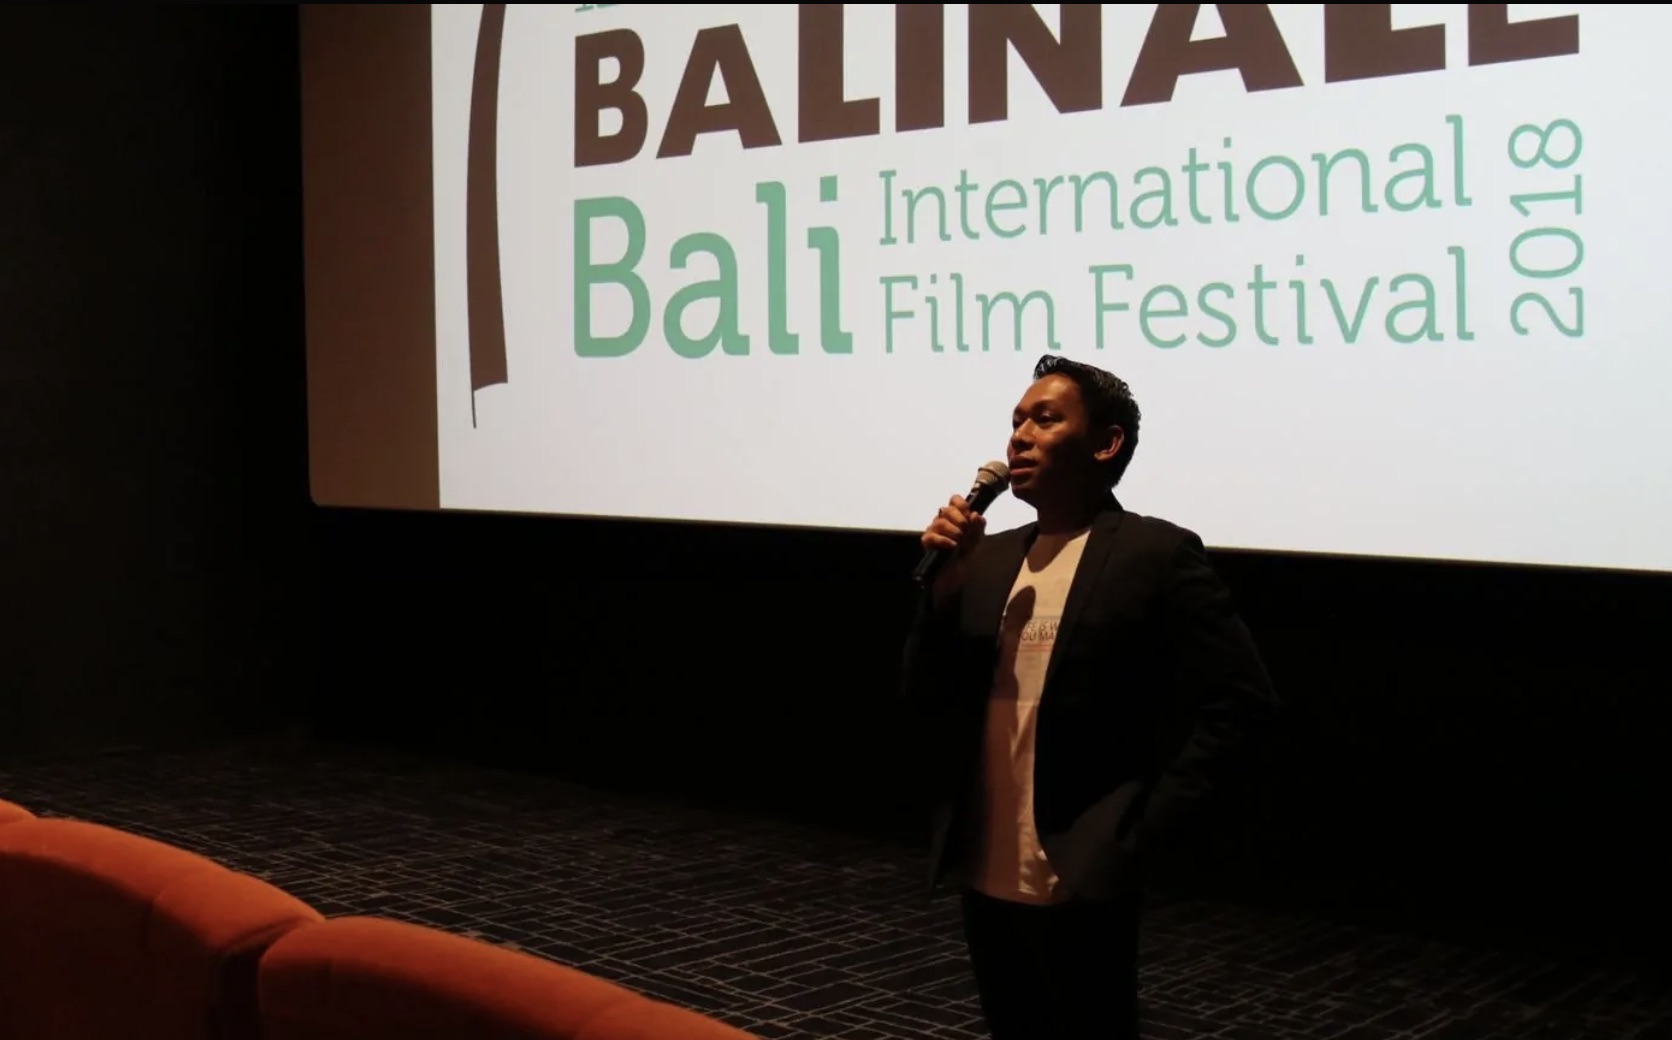 File photo of Tony Award winner Jhett Tolentino introducing his documentary at the 2018 Balinale. Photo: Balinale 